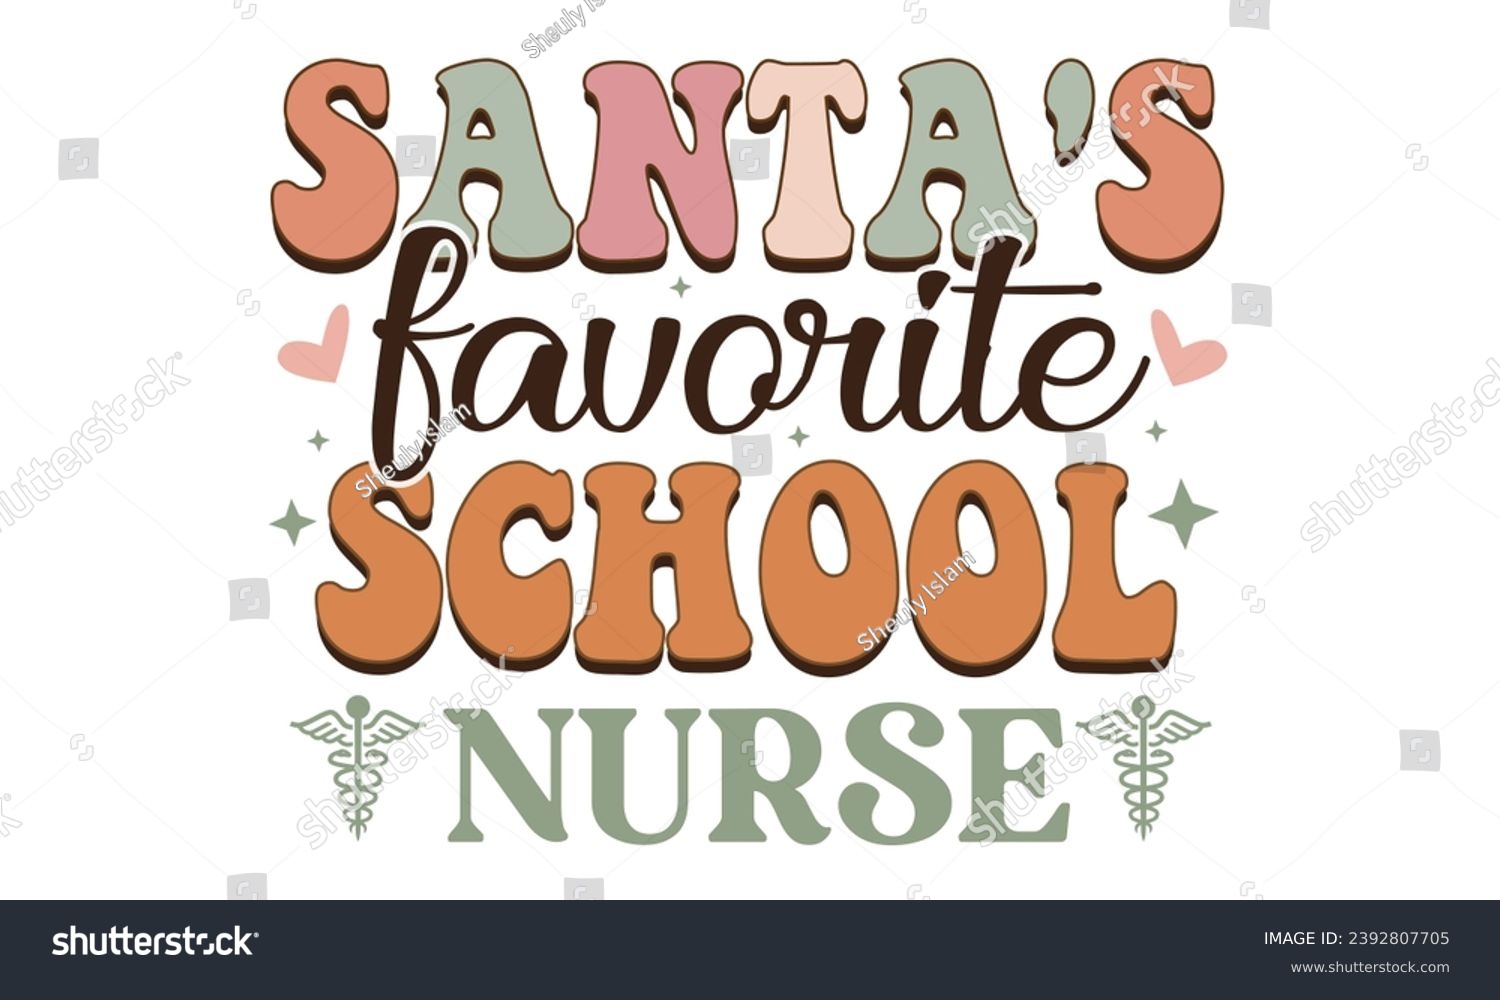 SVG of Santa's Favorite School Nurse Christmas T-Shirt Design svg